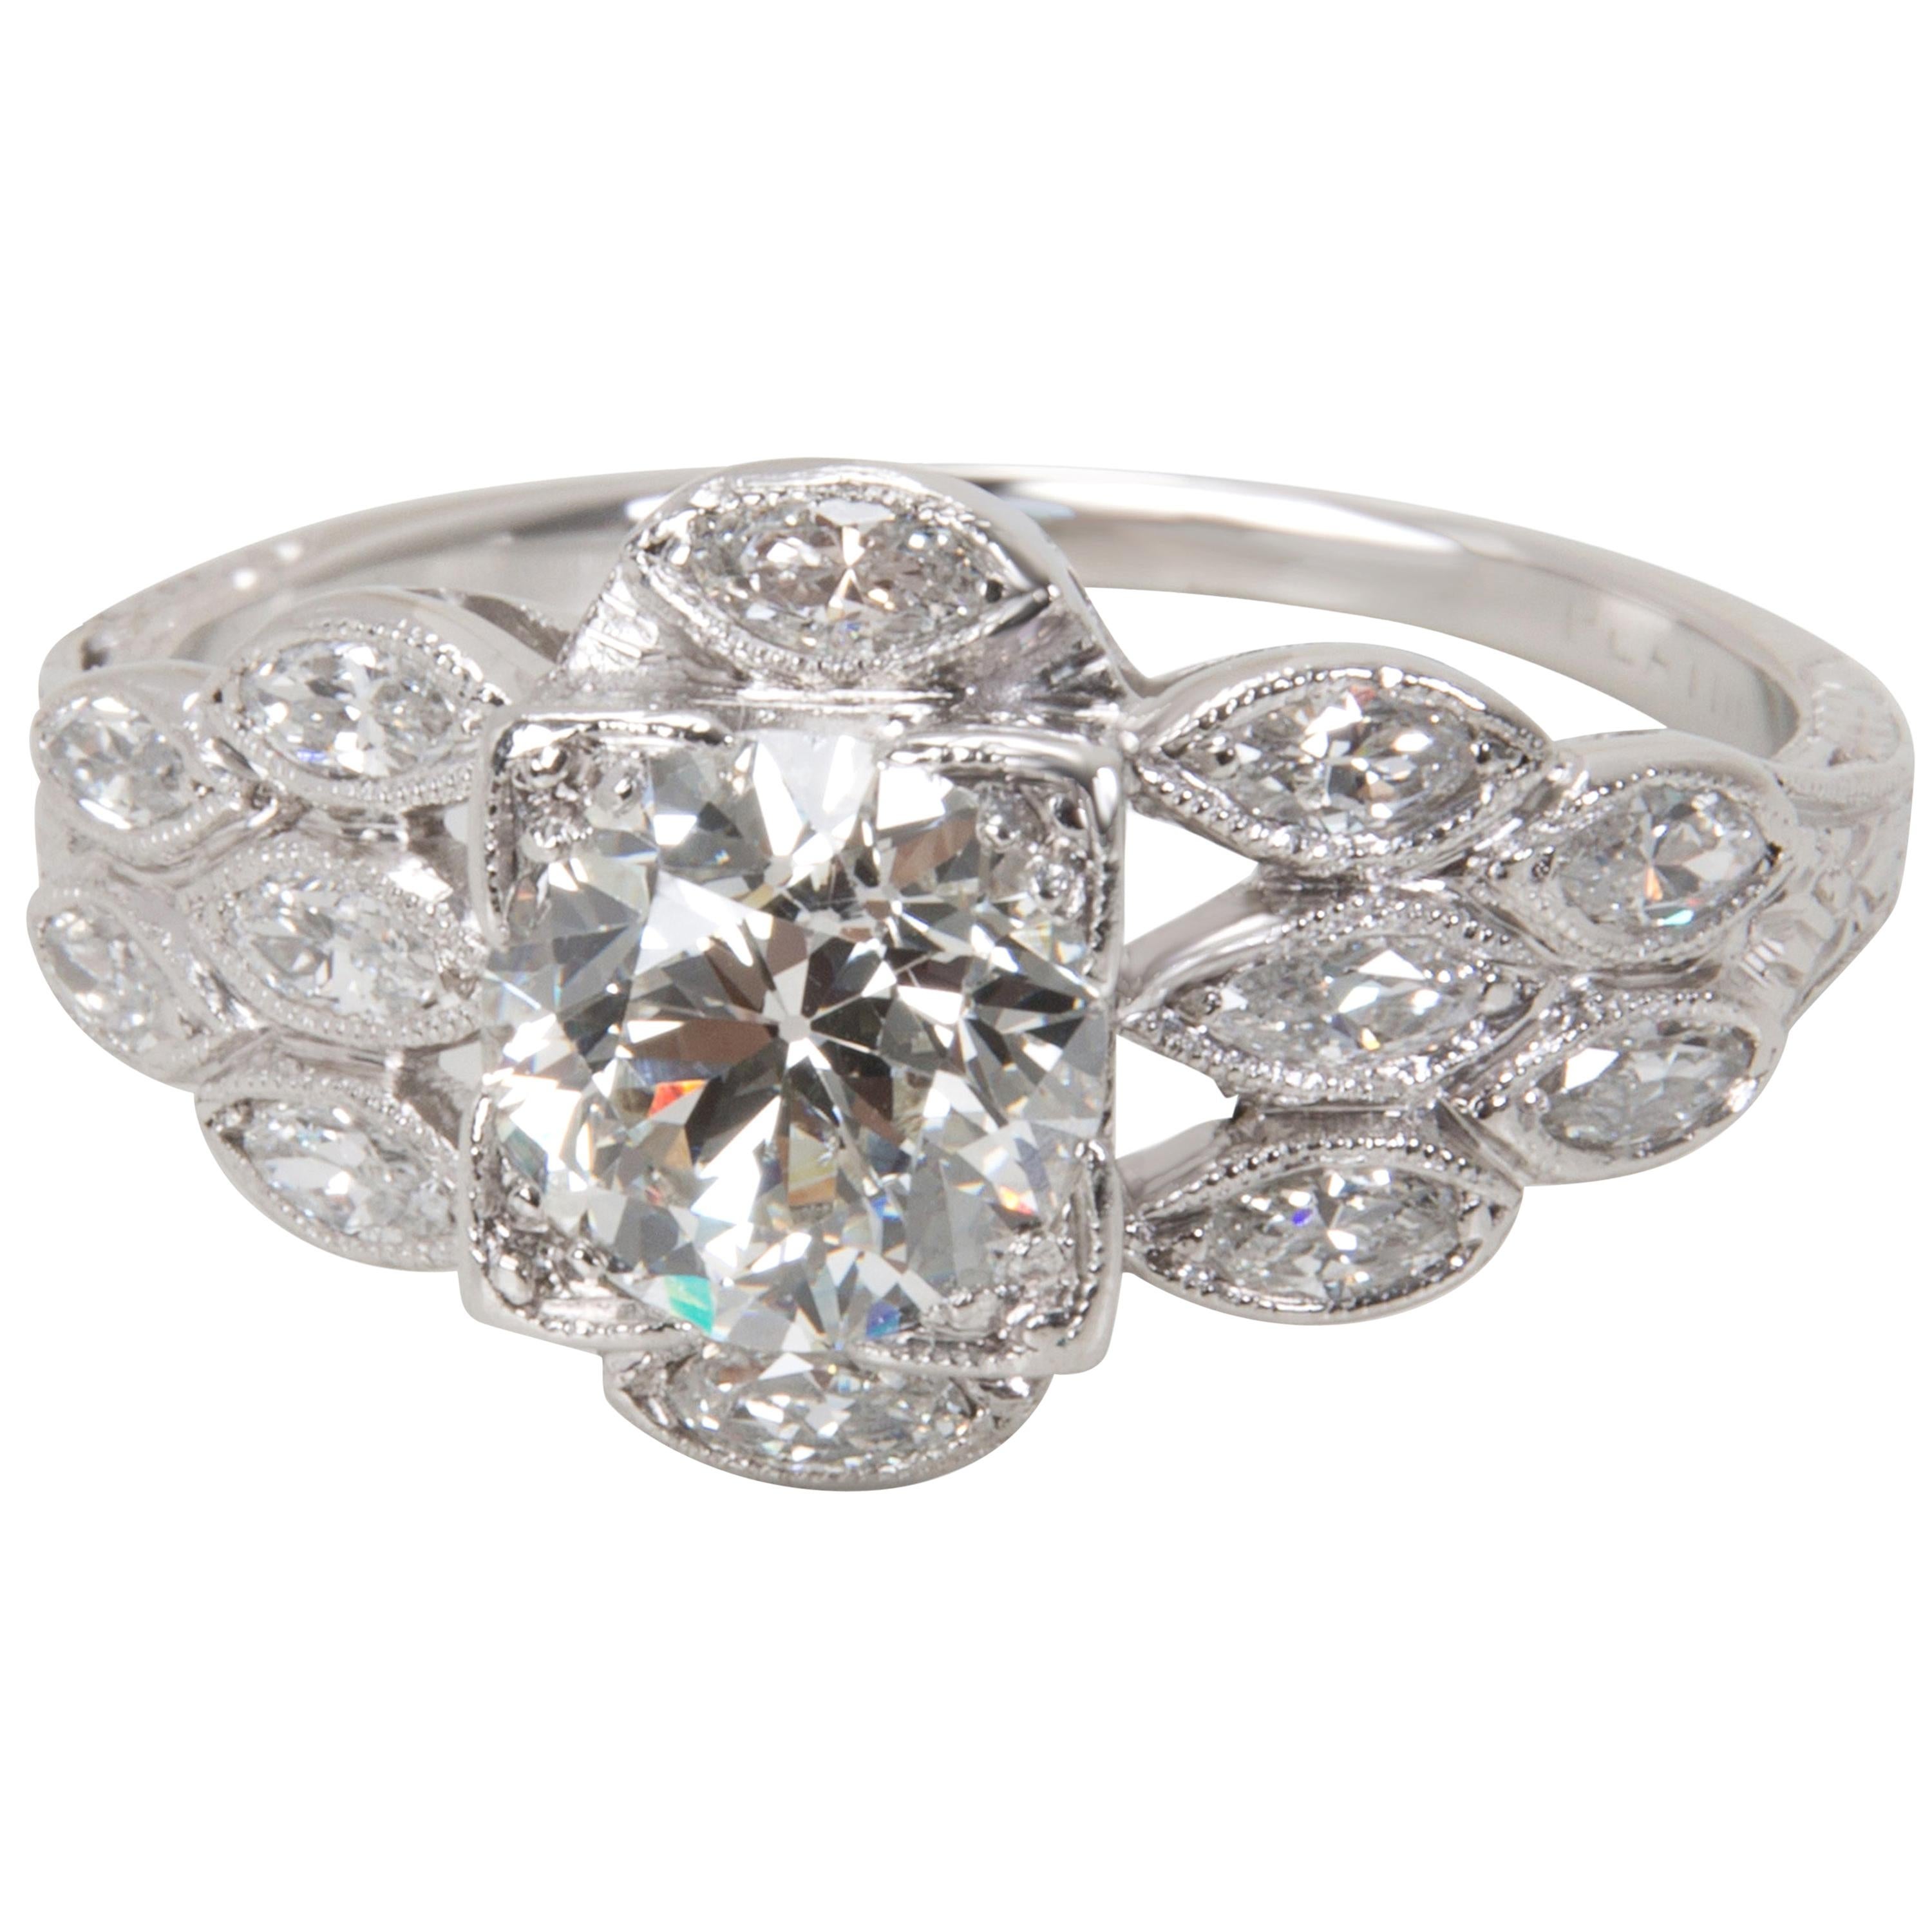 IGI Certified Old Euro Cut Diamond Engagement Ring in Platinum '1.50 Carat'